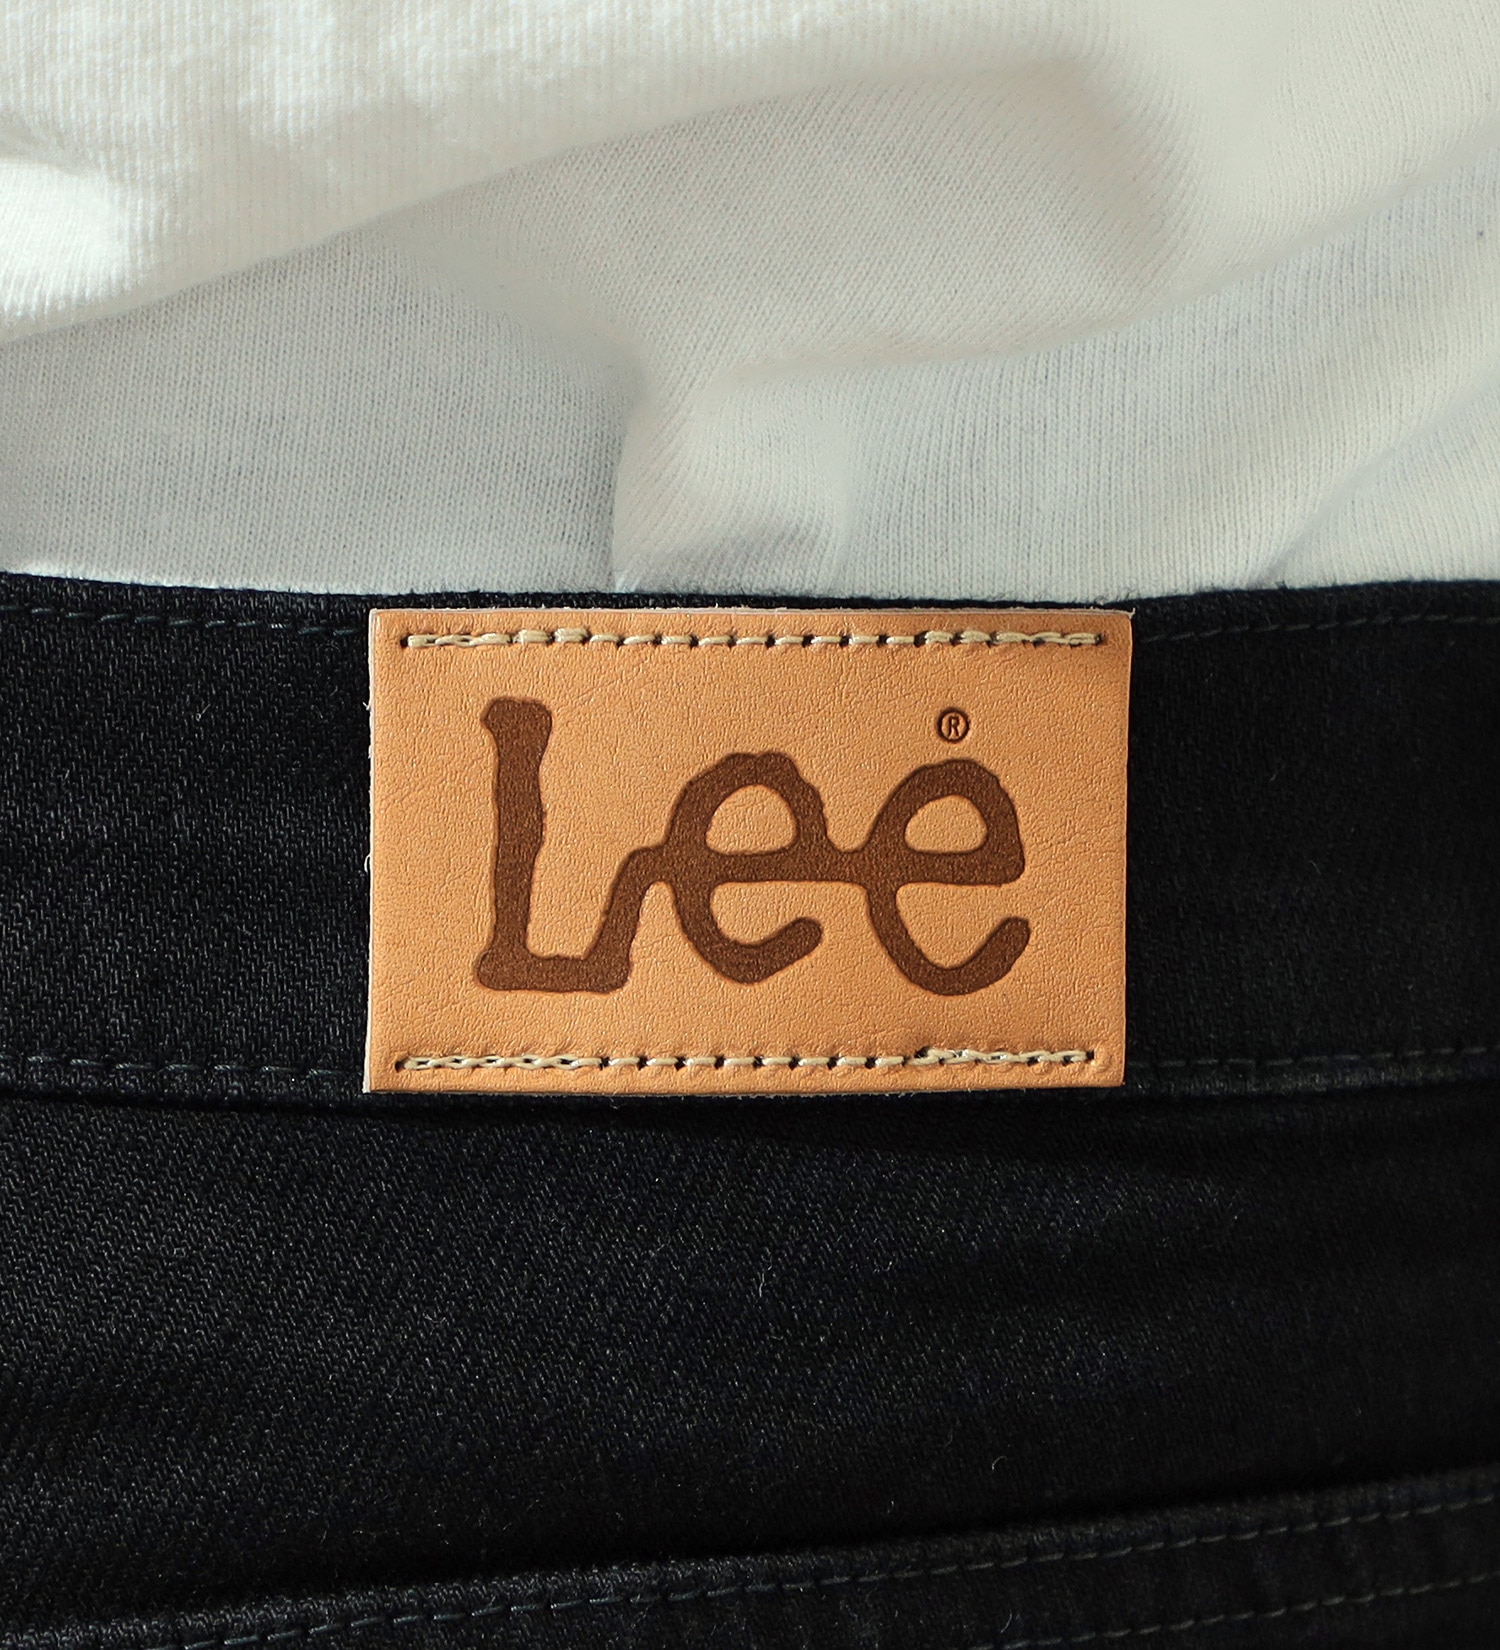 Lee(リー)の【超快適ストレッチ】すっきり細身スキニーパンツ|パンツ/デニムパンツ/メンズ|ブラック